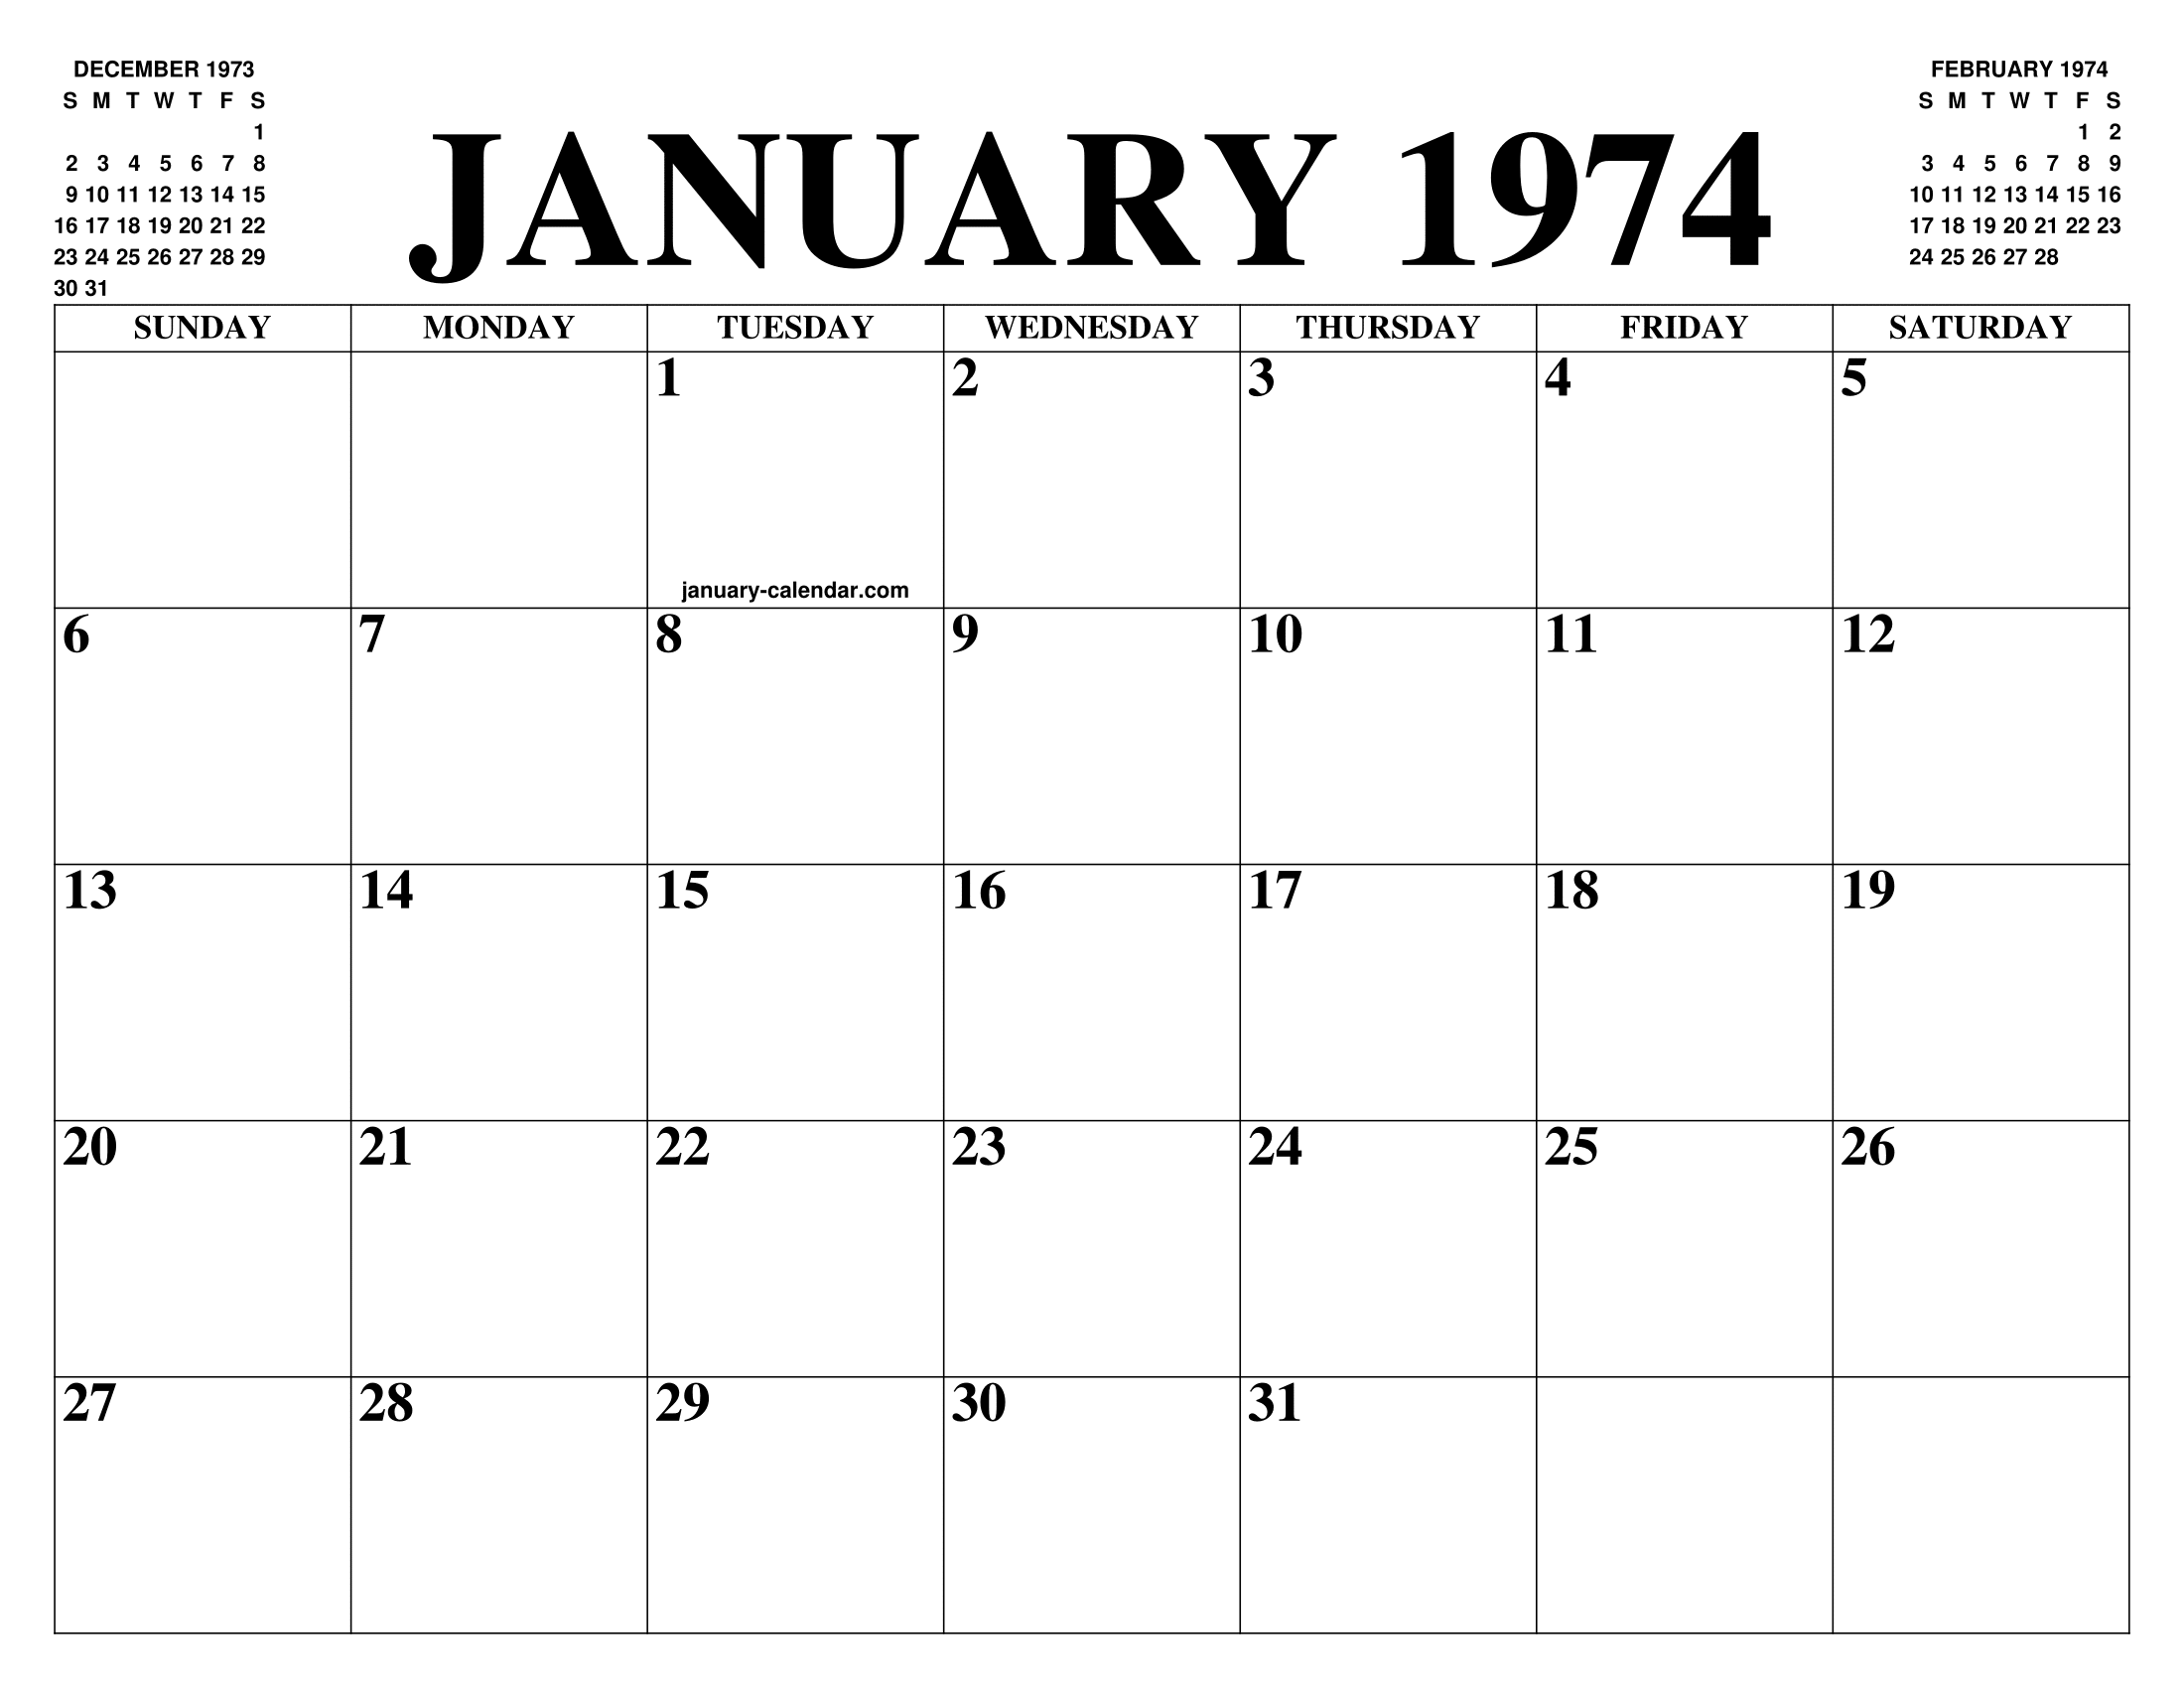 JANUARY 1974 CALENDAR OF THE MONTH FREE PRINTABLE JANUARY CALENDAR OF